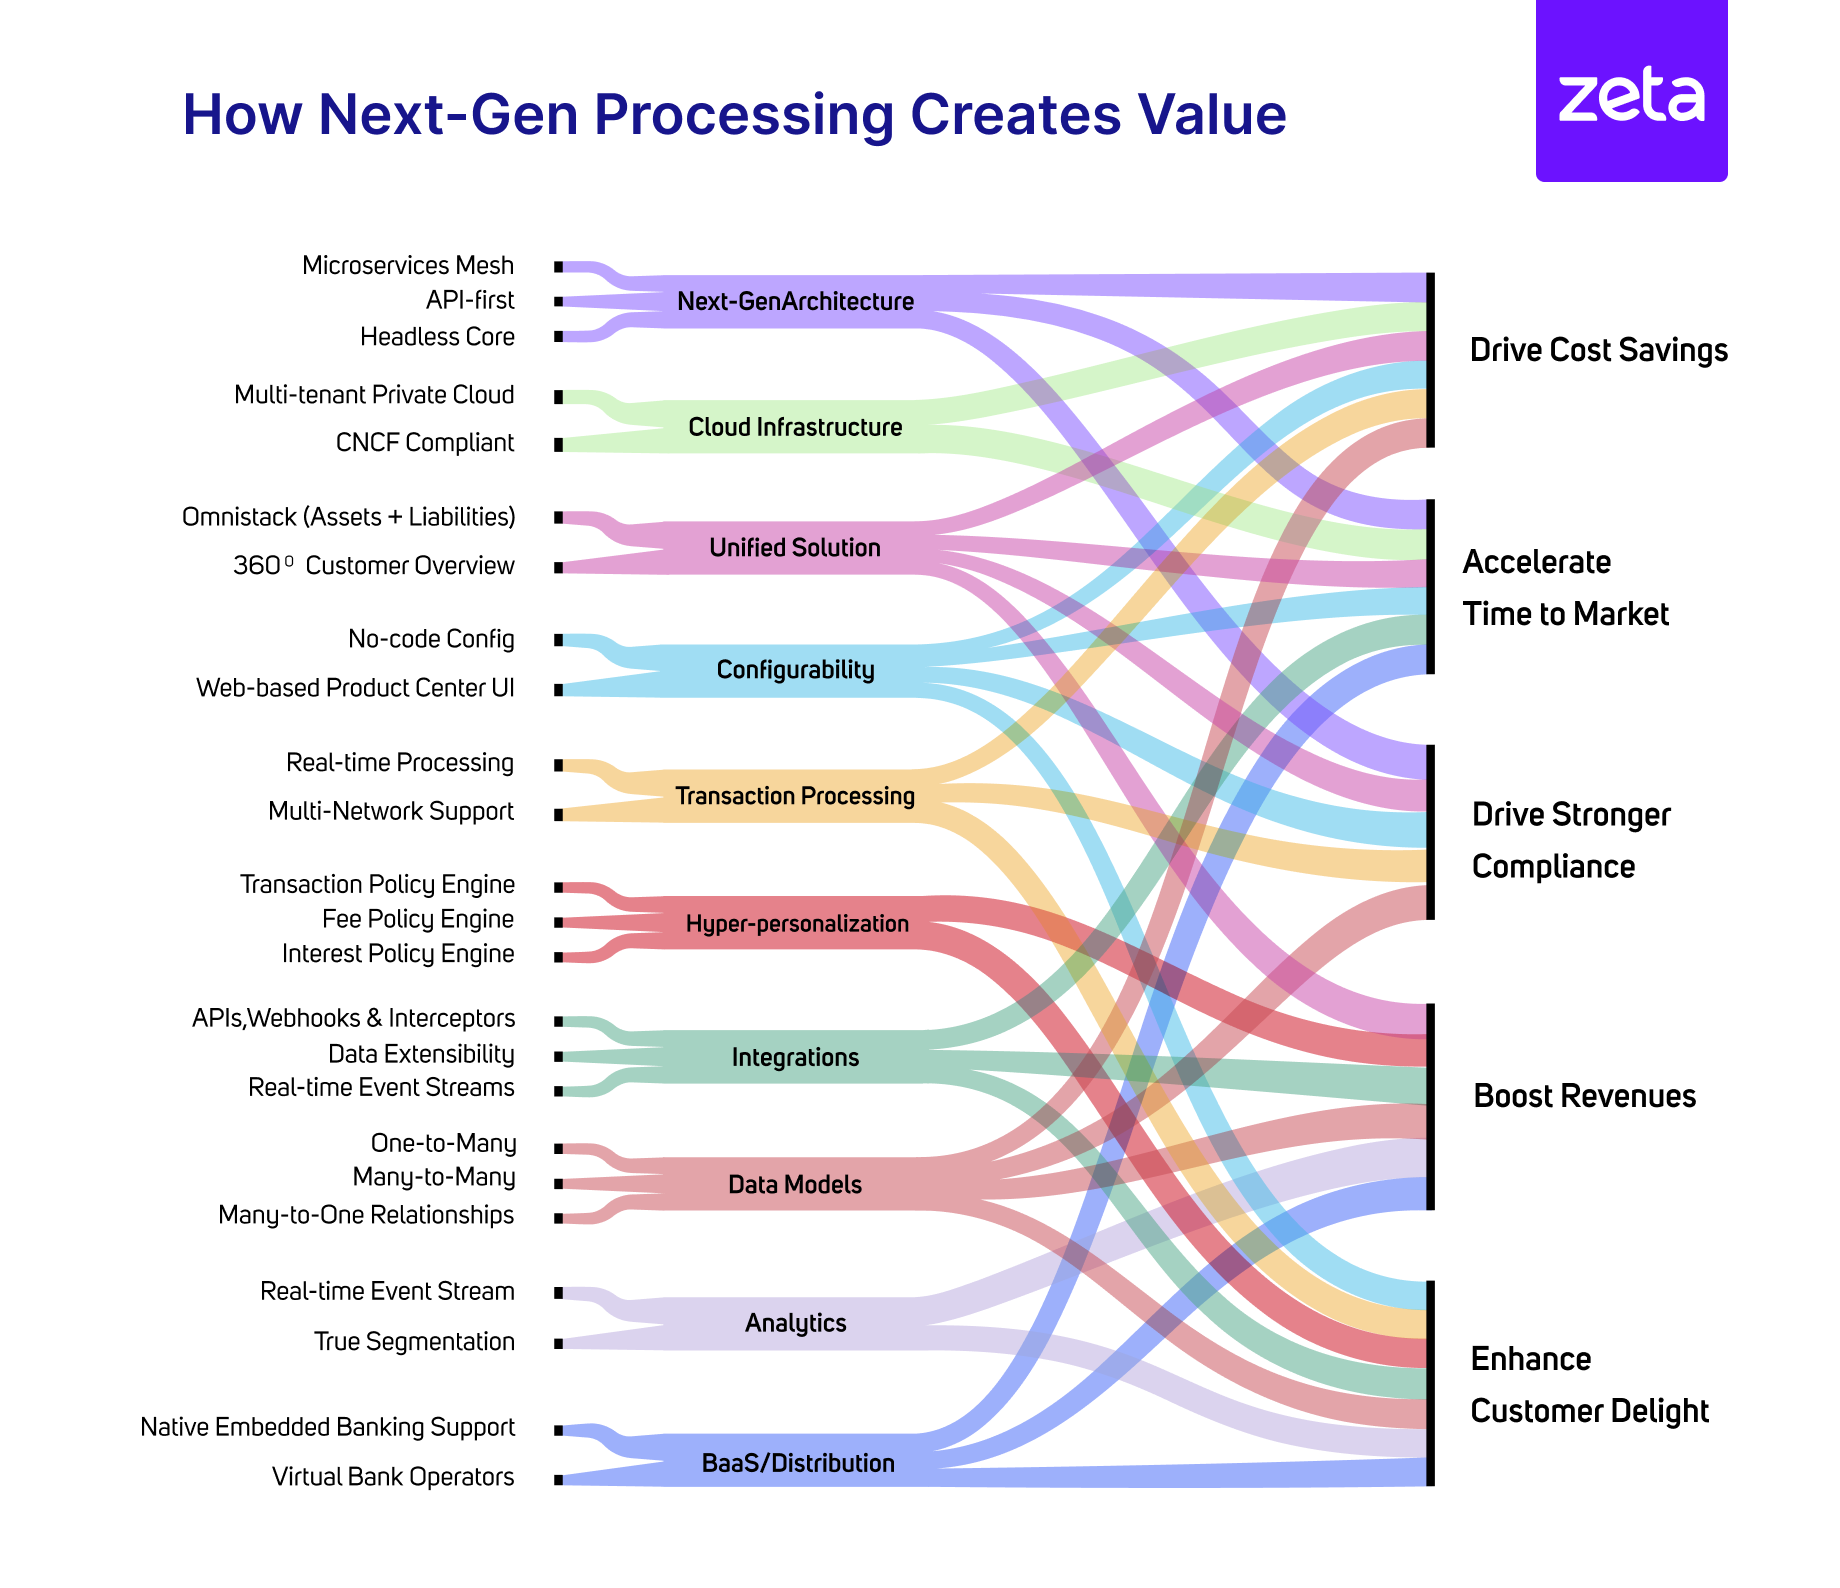 Image 1: Next-Gen Processing Value Creation Framework